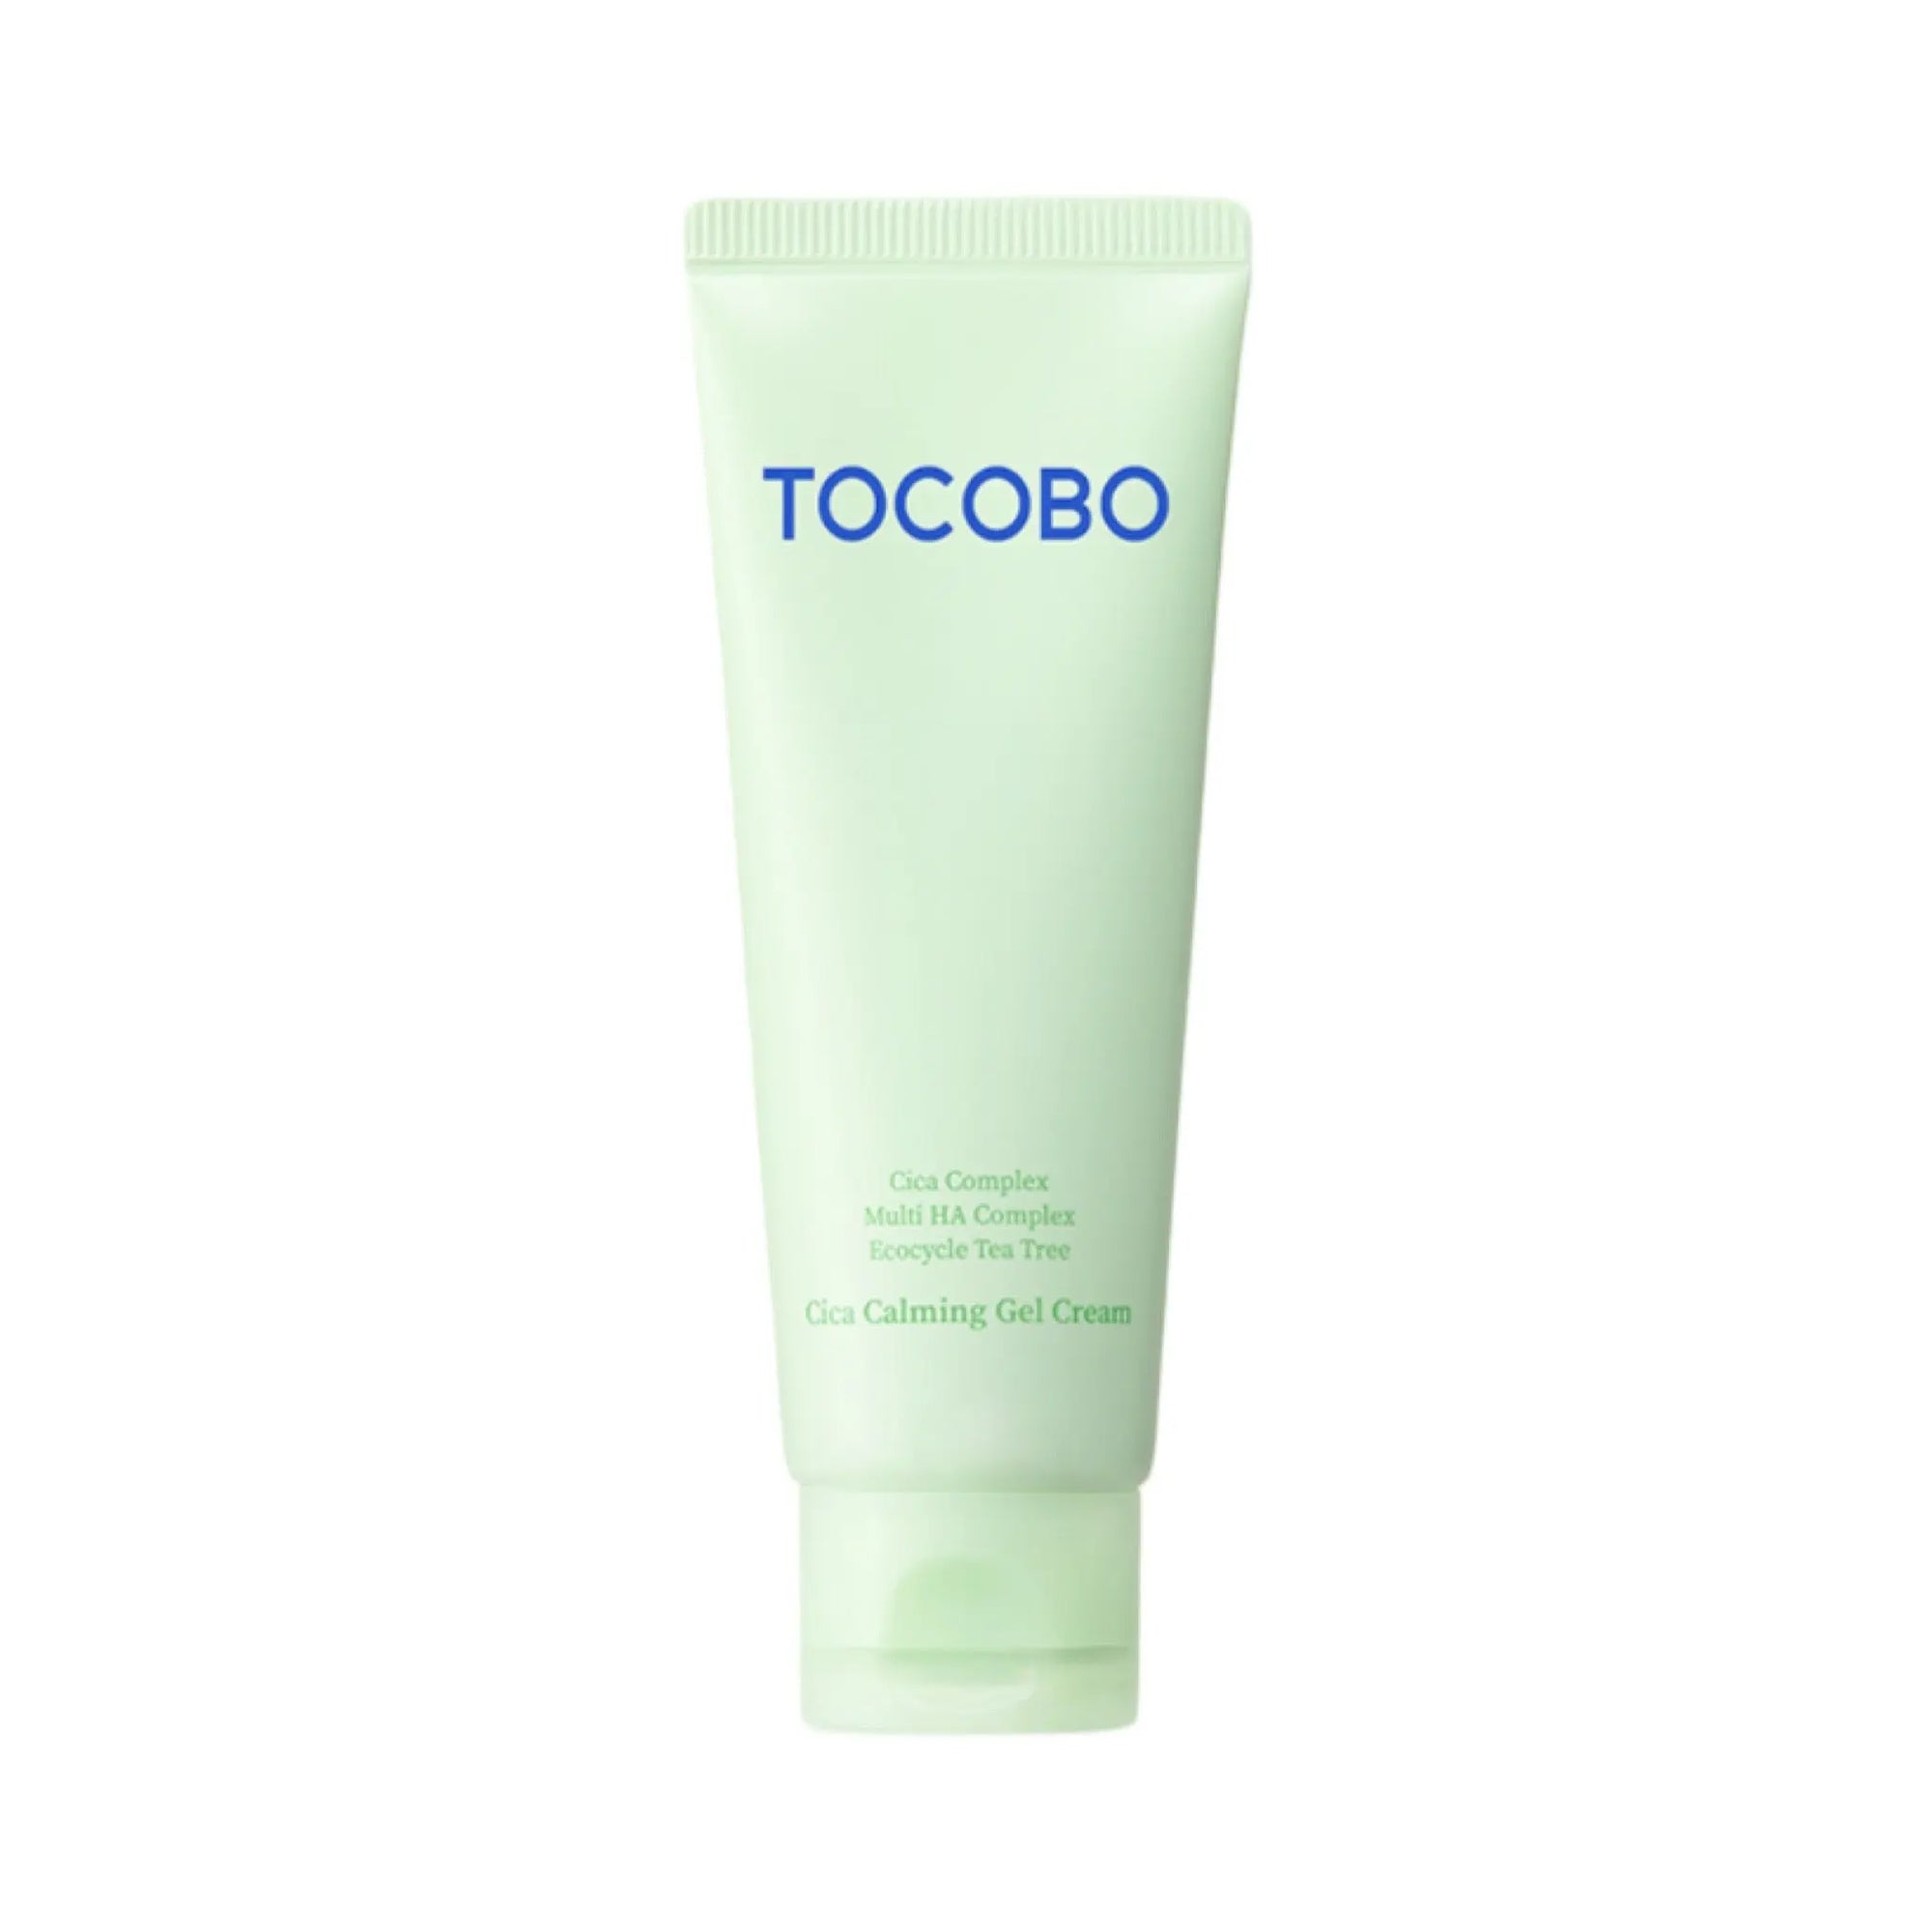 Tocobo - Cica Calming Gel Cream 75mL Tocobo